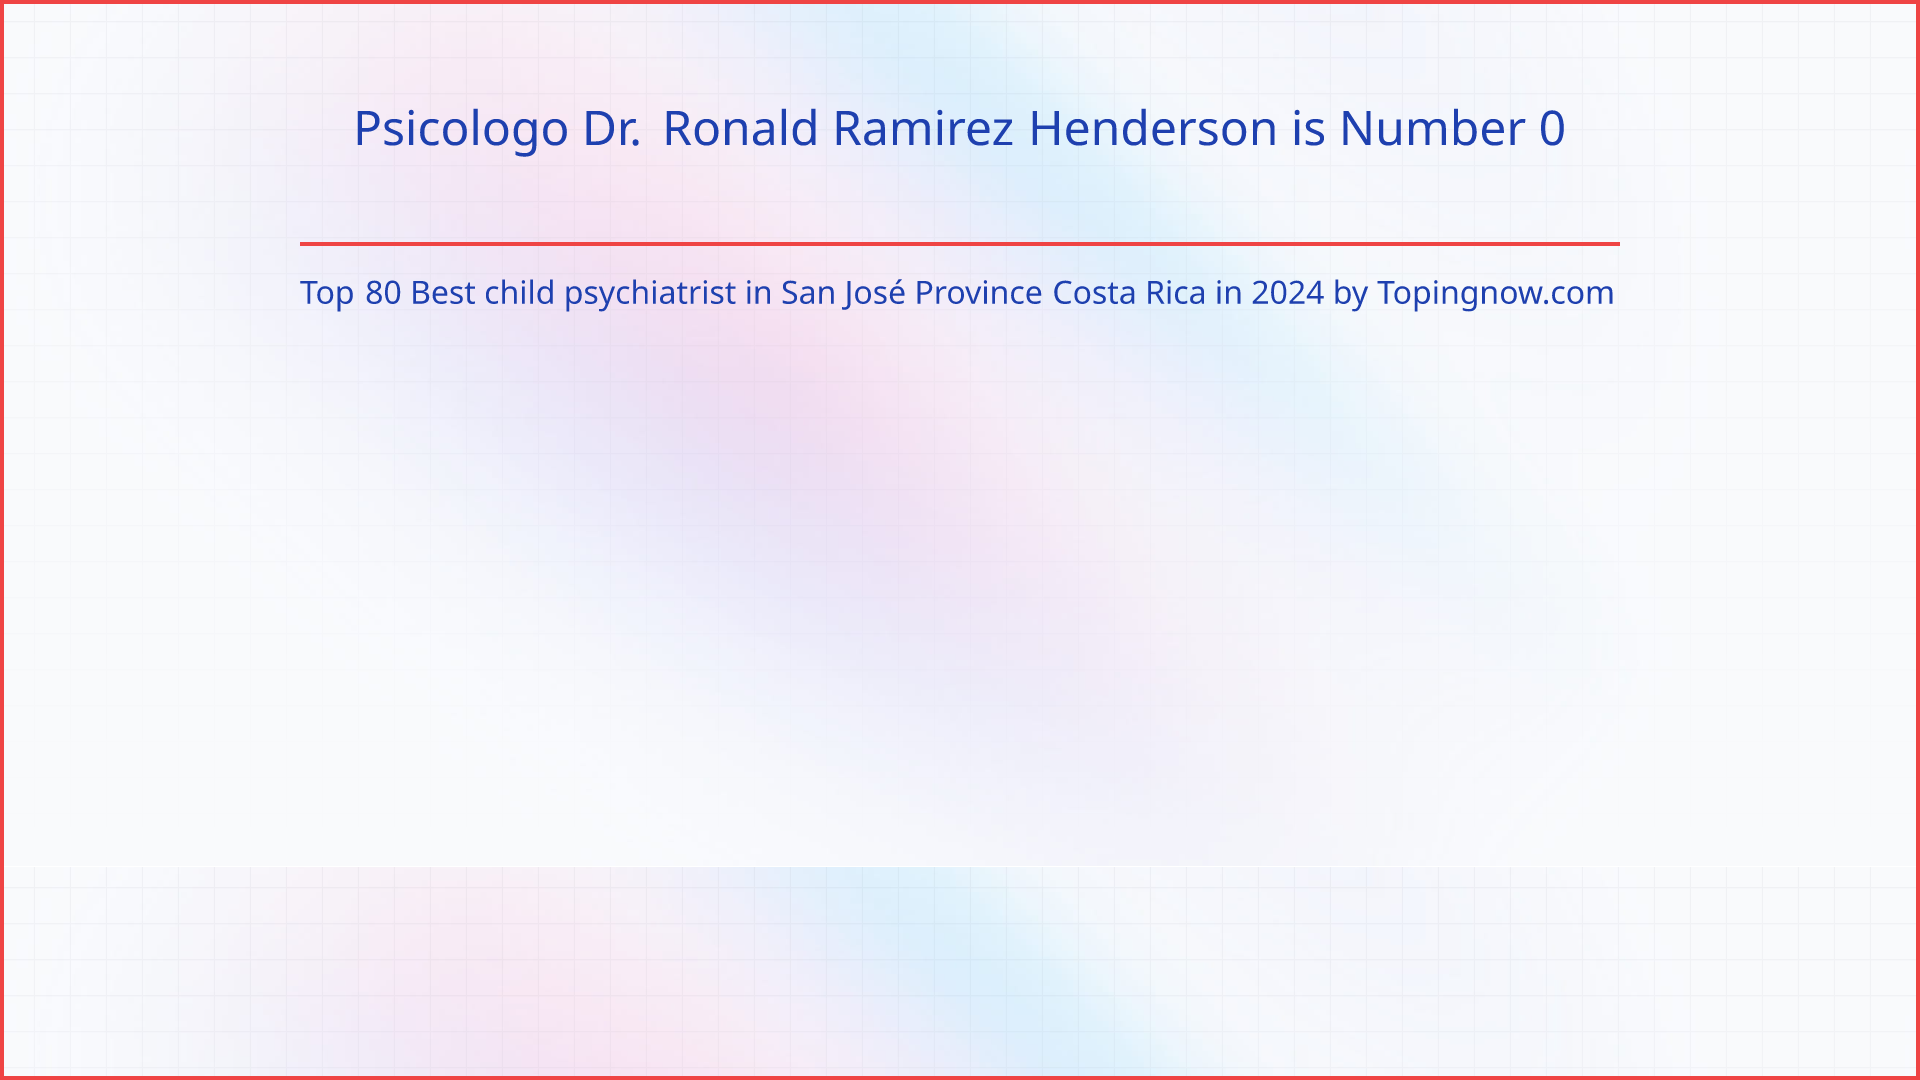 Psicologo Dr. Ronald Ramirez Henderson: Top 80 Best child psychiatrist in San José Province Costa Rica in 2024